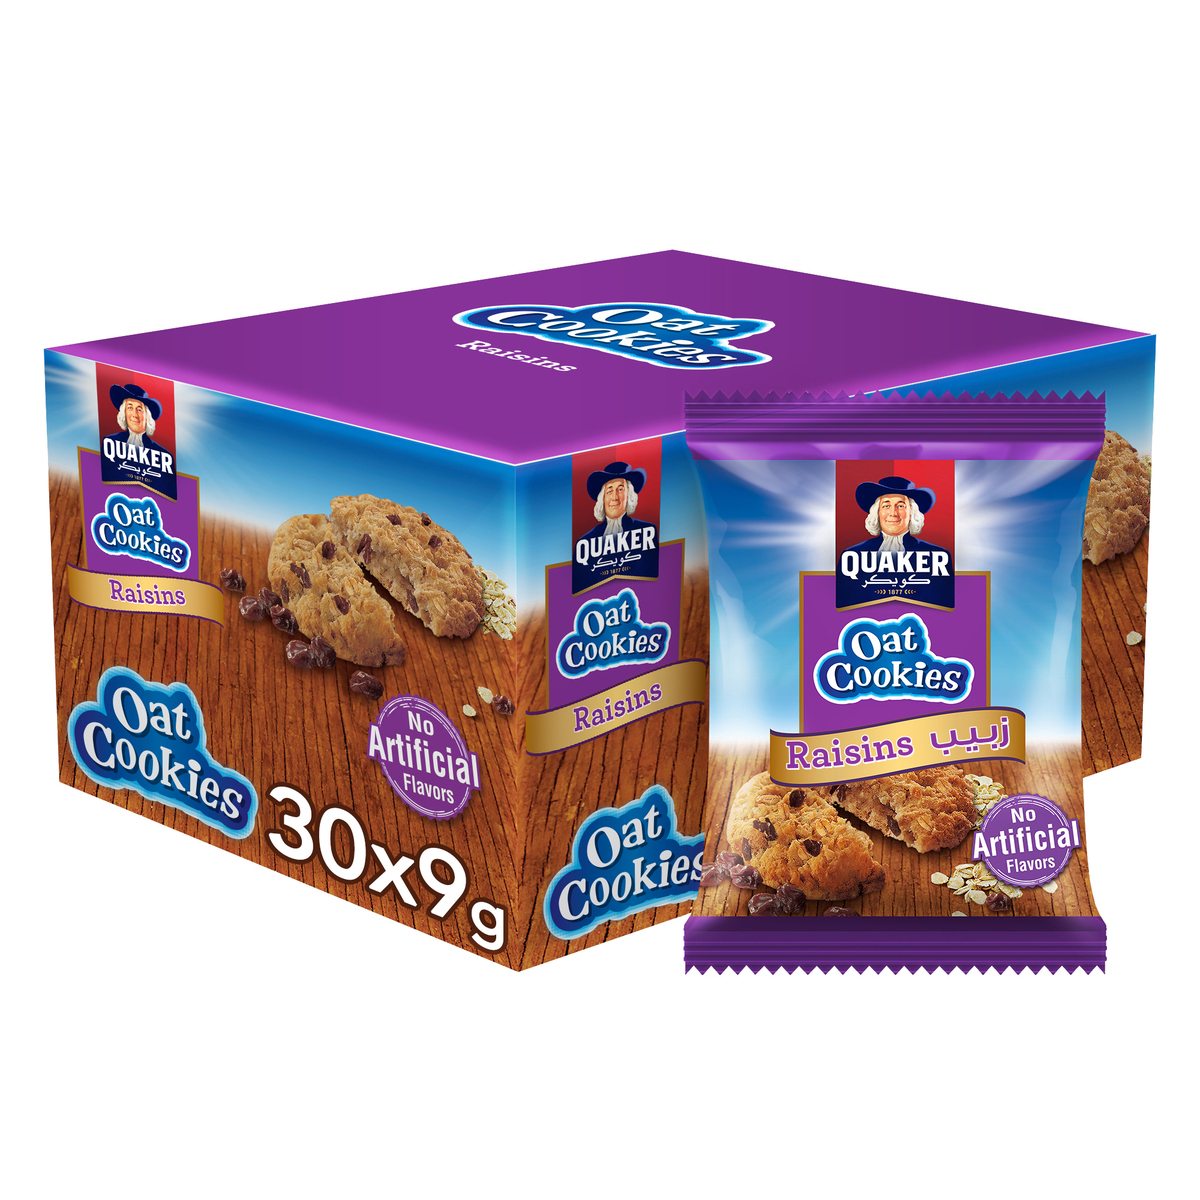 Quaker Oat Cookies with Raisins 30 x 9 g